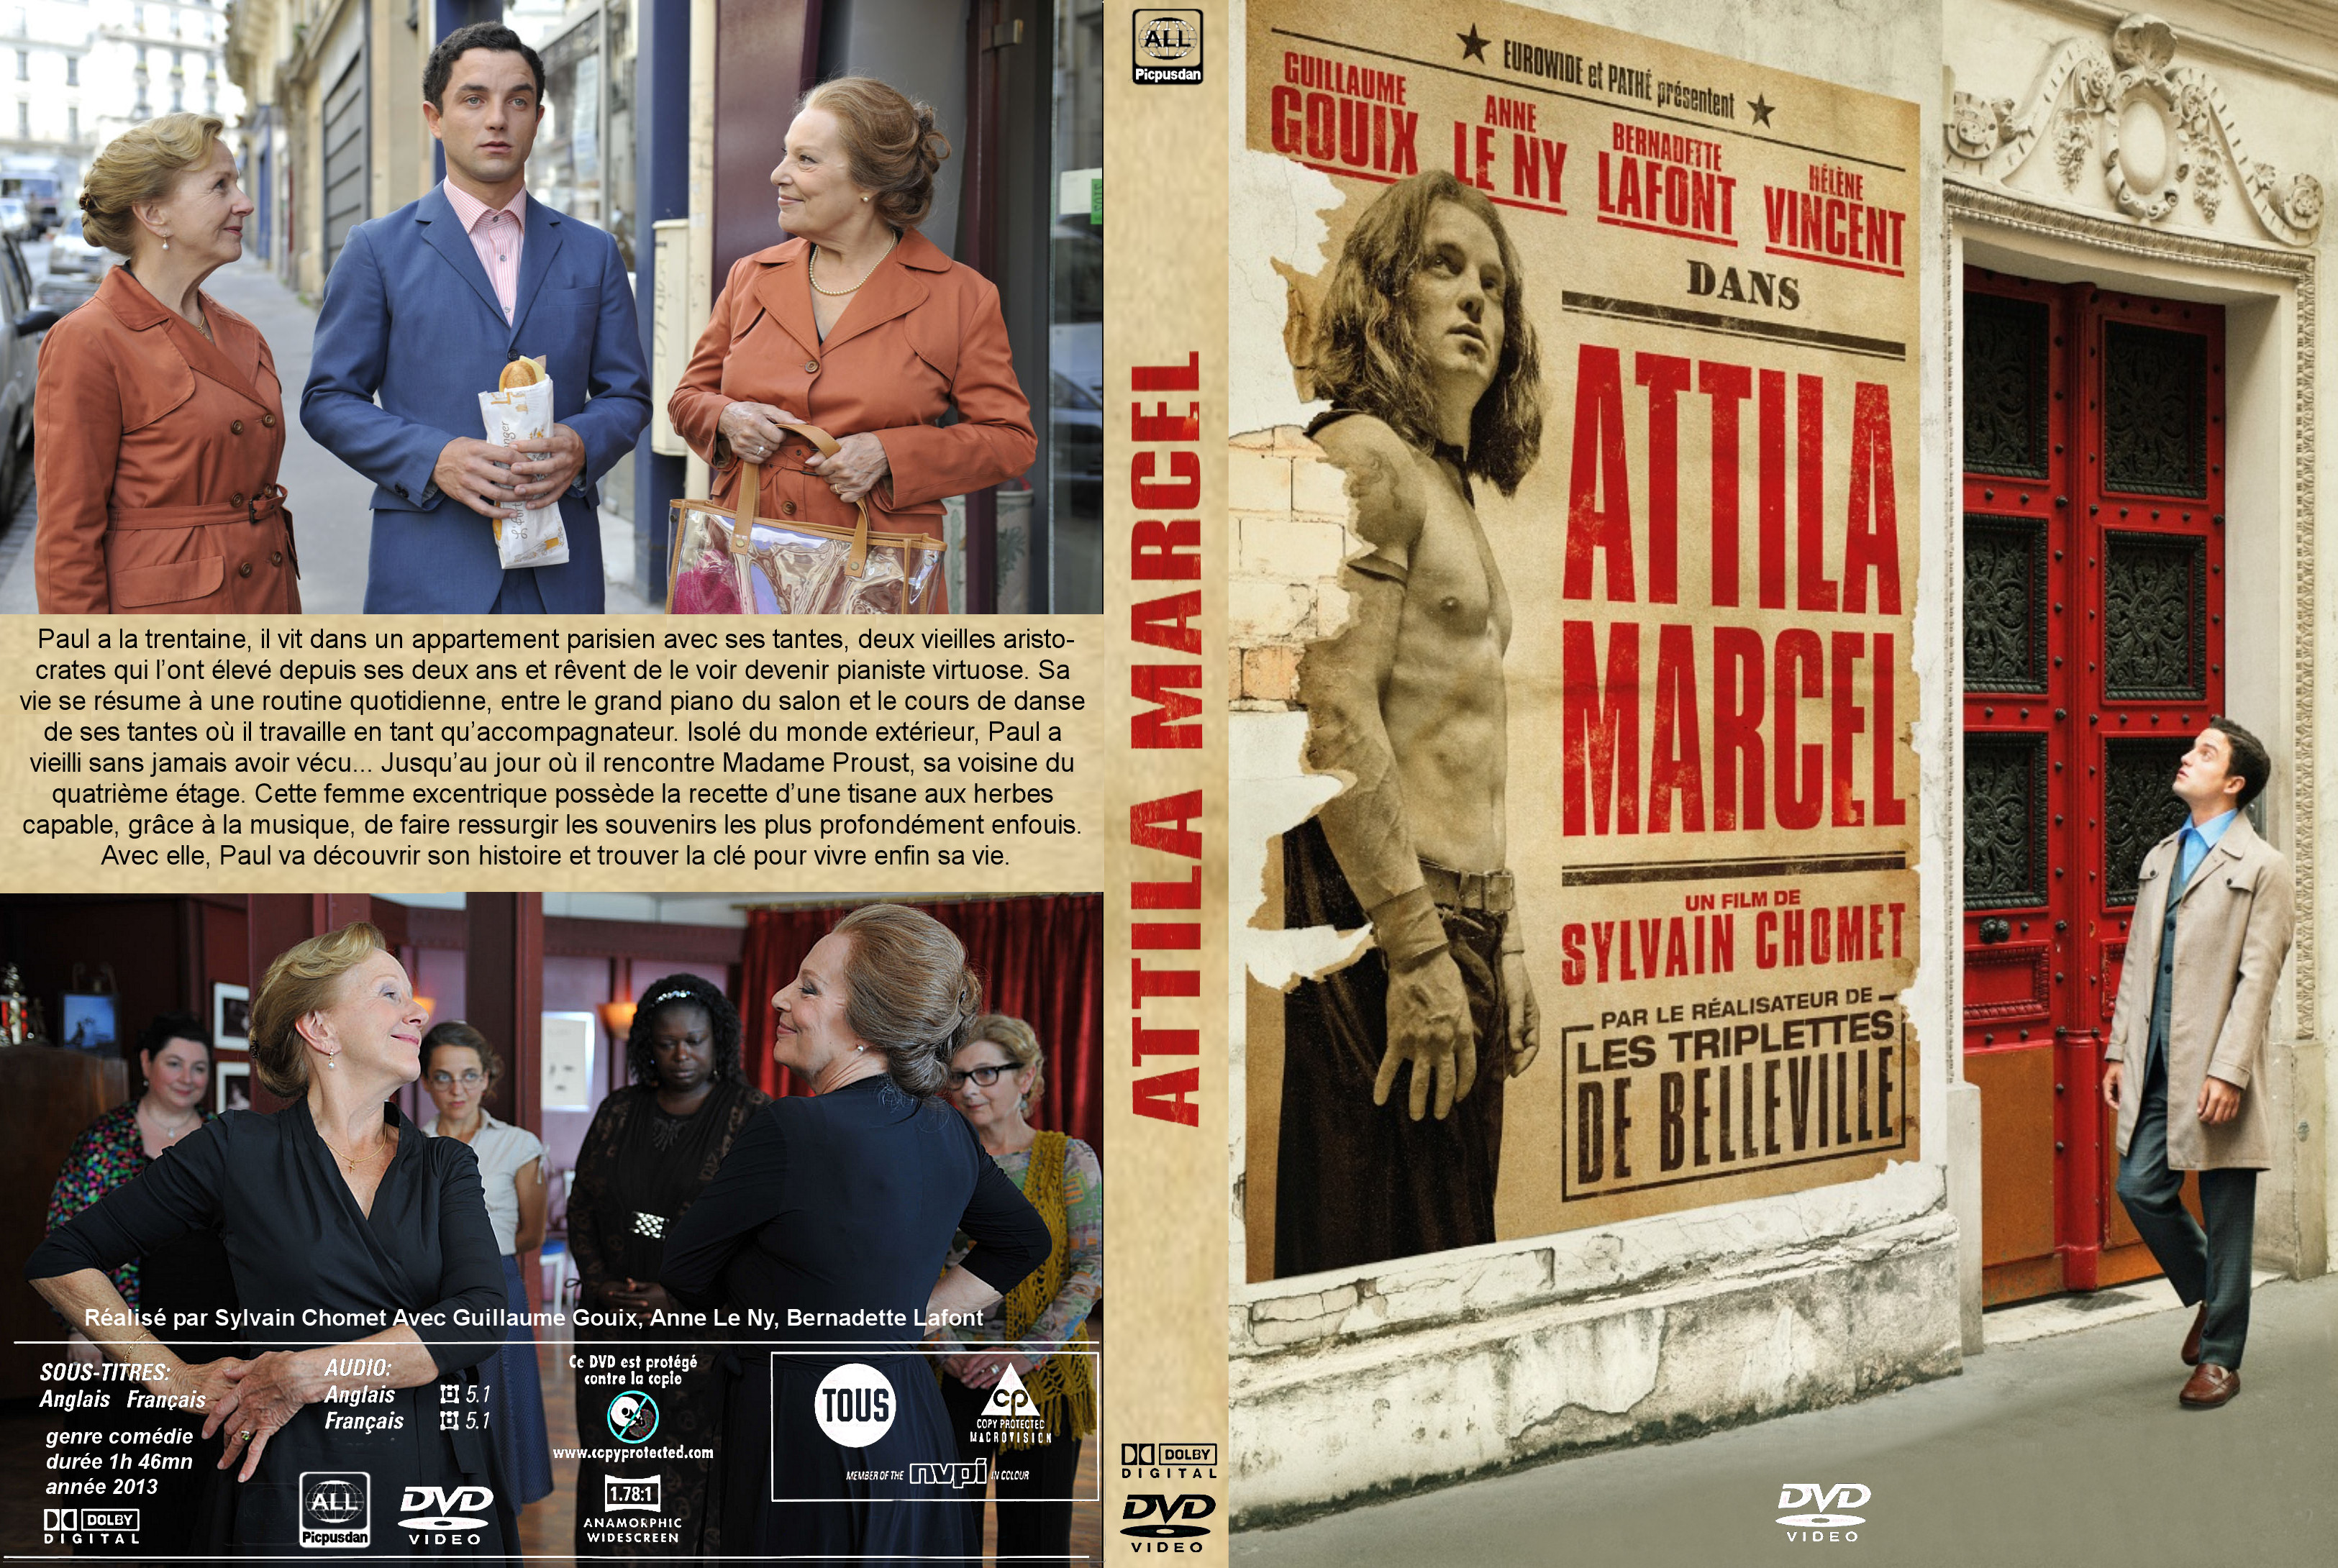 Jaquette DVD Attila Marcel custom